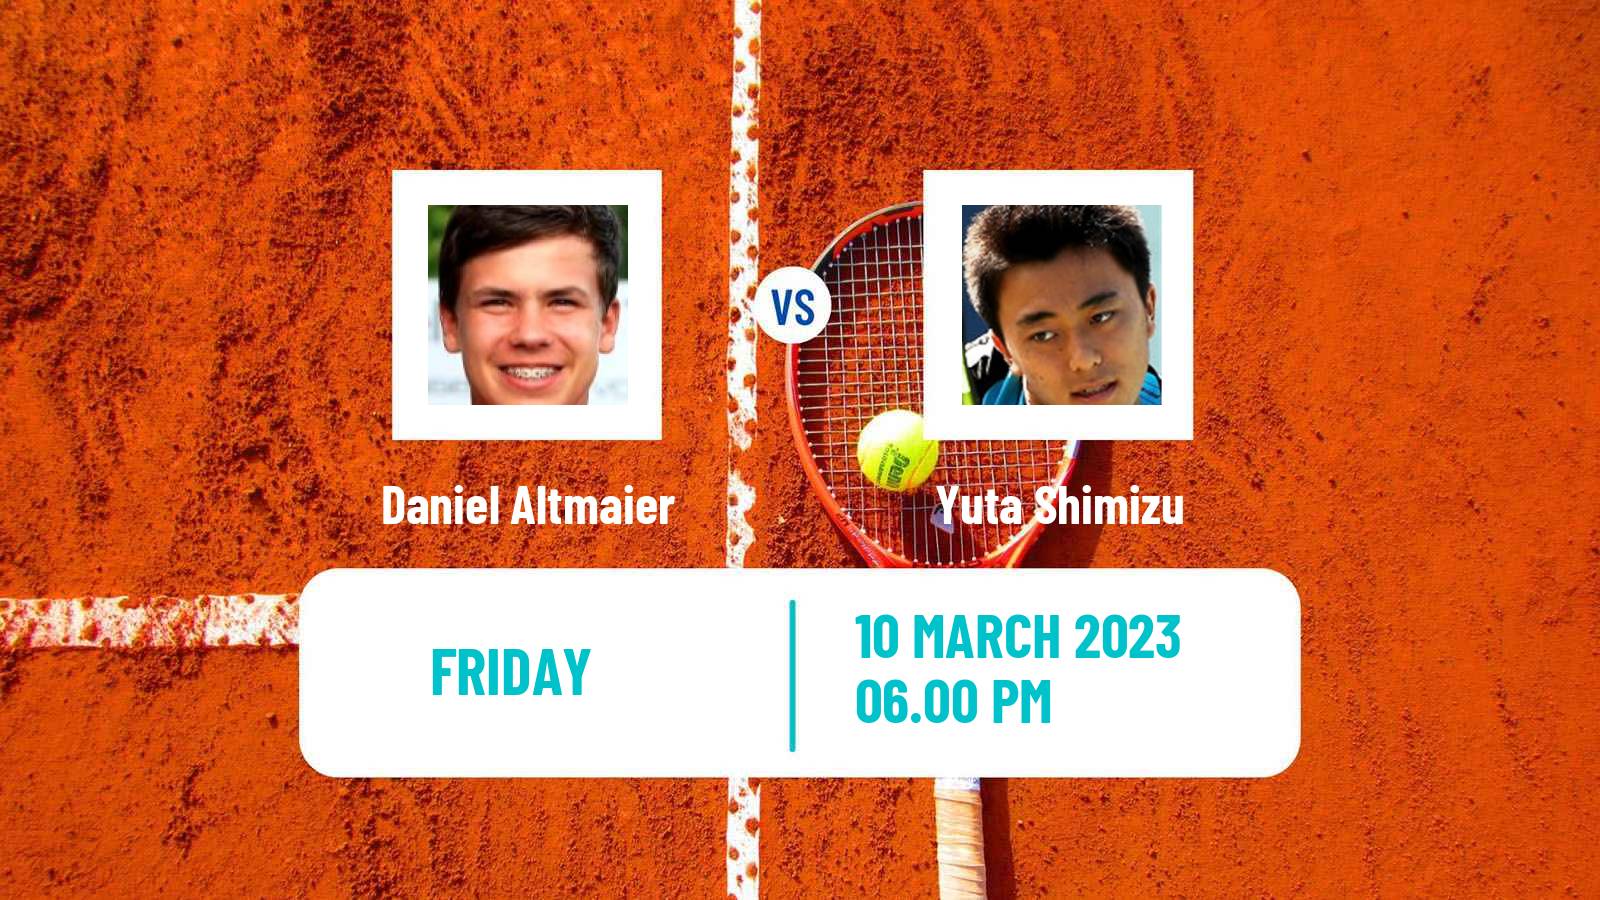 Tennis ATP Challenger Daniel Altmaier - Yuta Shimizu